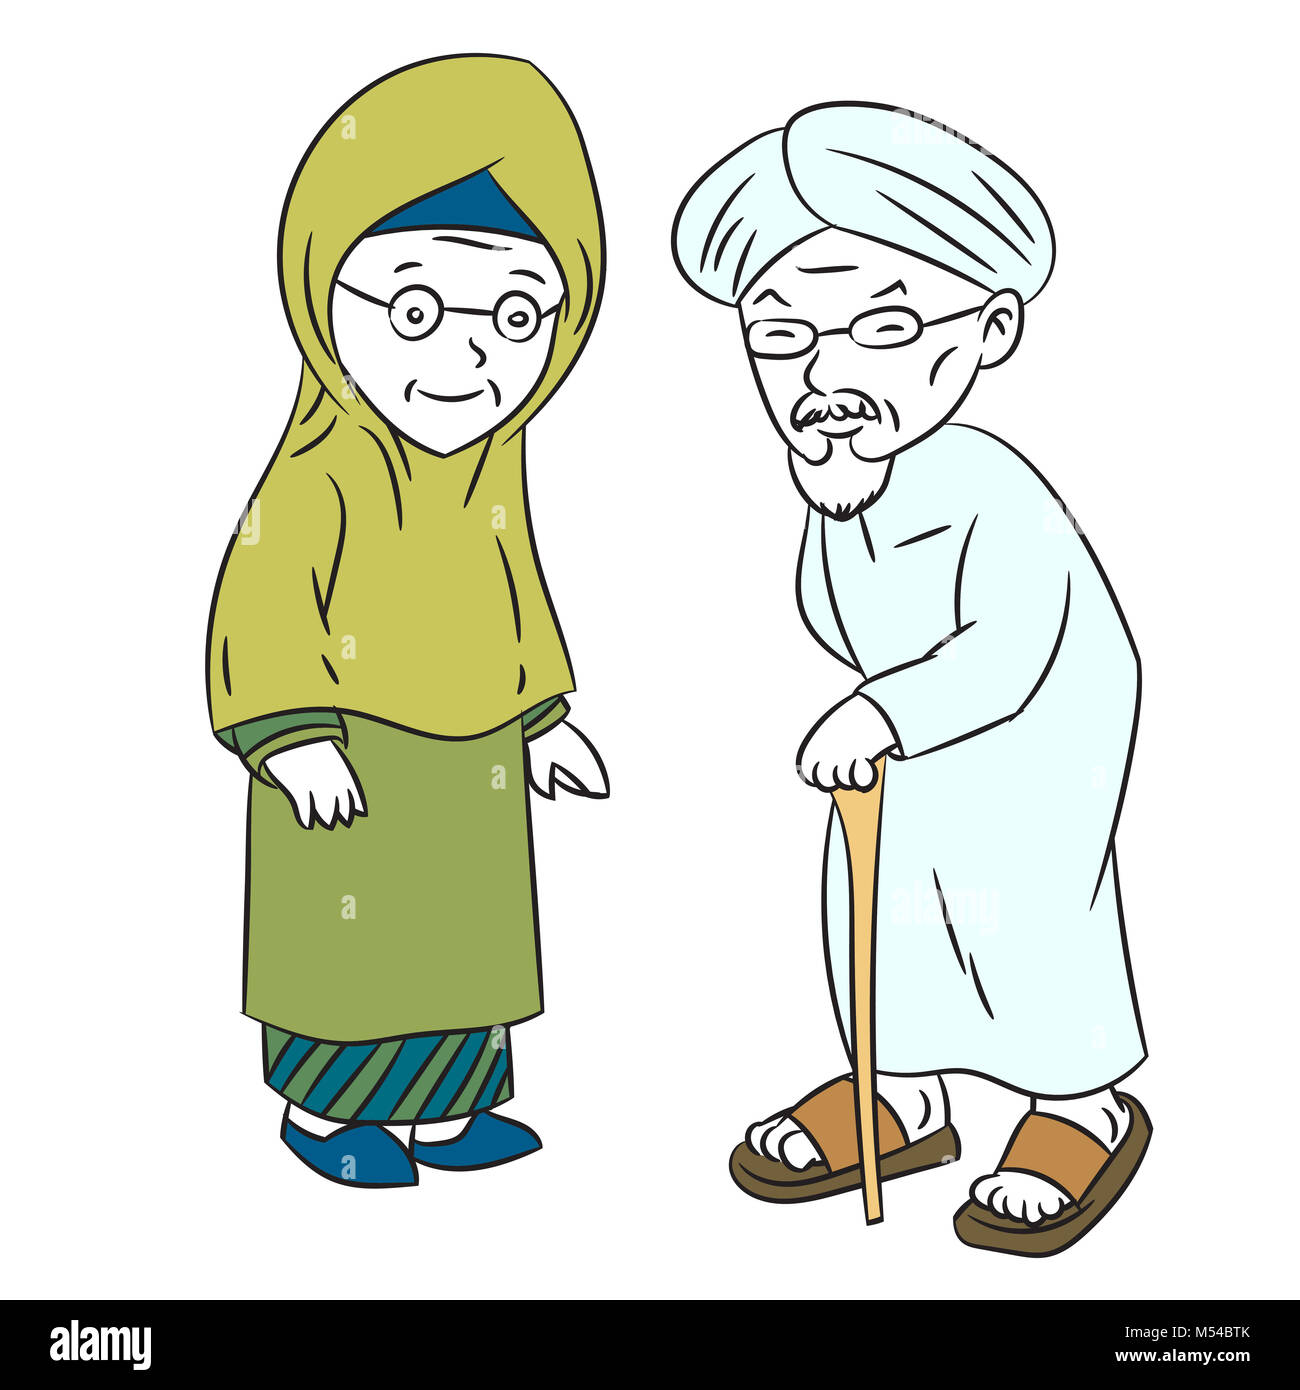 Illustration of Muslim Elderly Cartoon -Character Vector Stock Photo